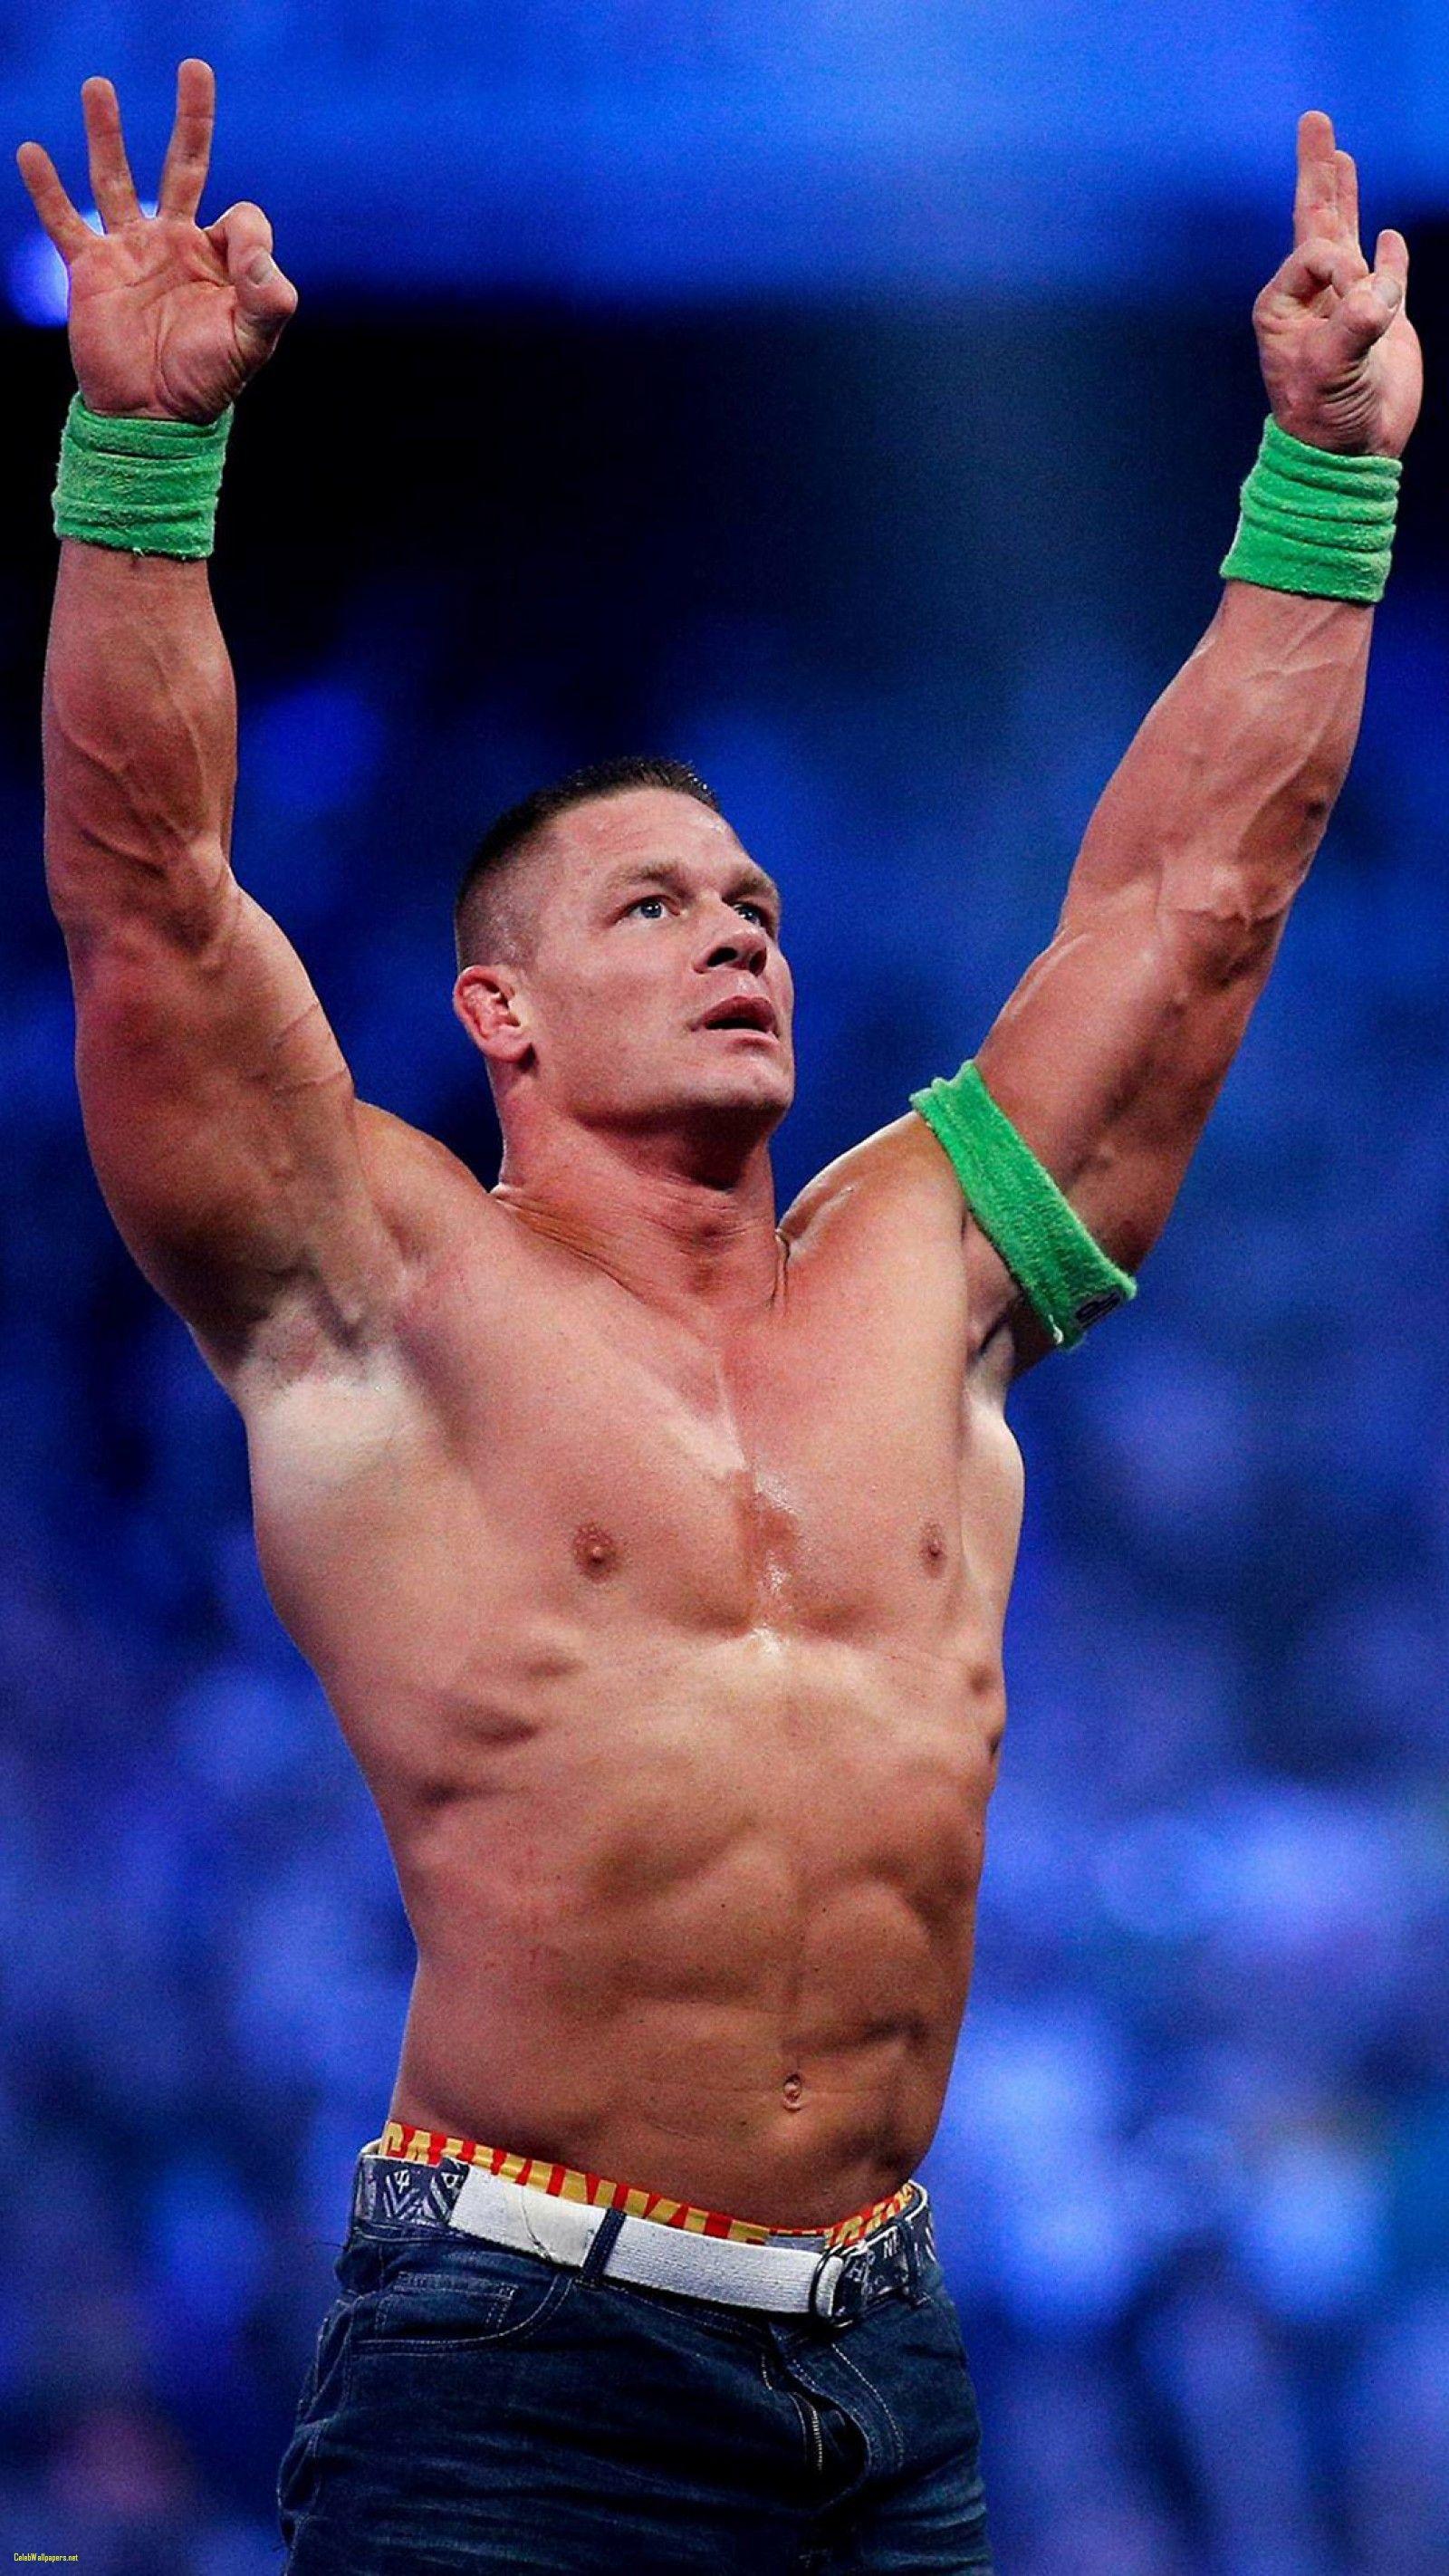 John Cena Wwe Wrestler Raw Smackdown Wallpaper Beautiful John Cena